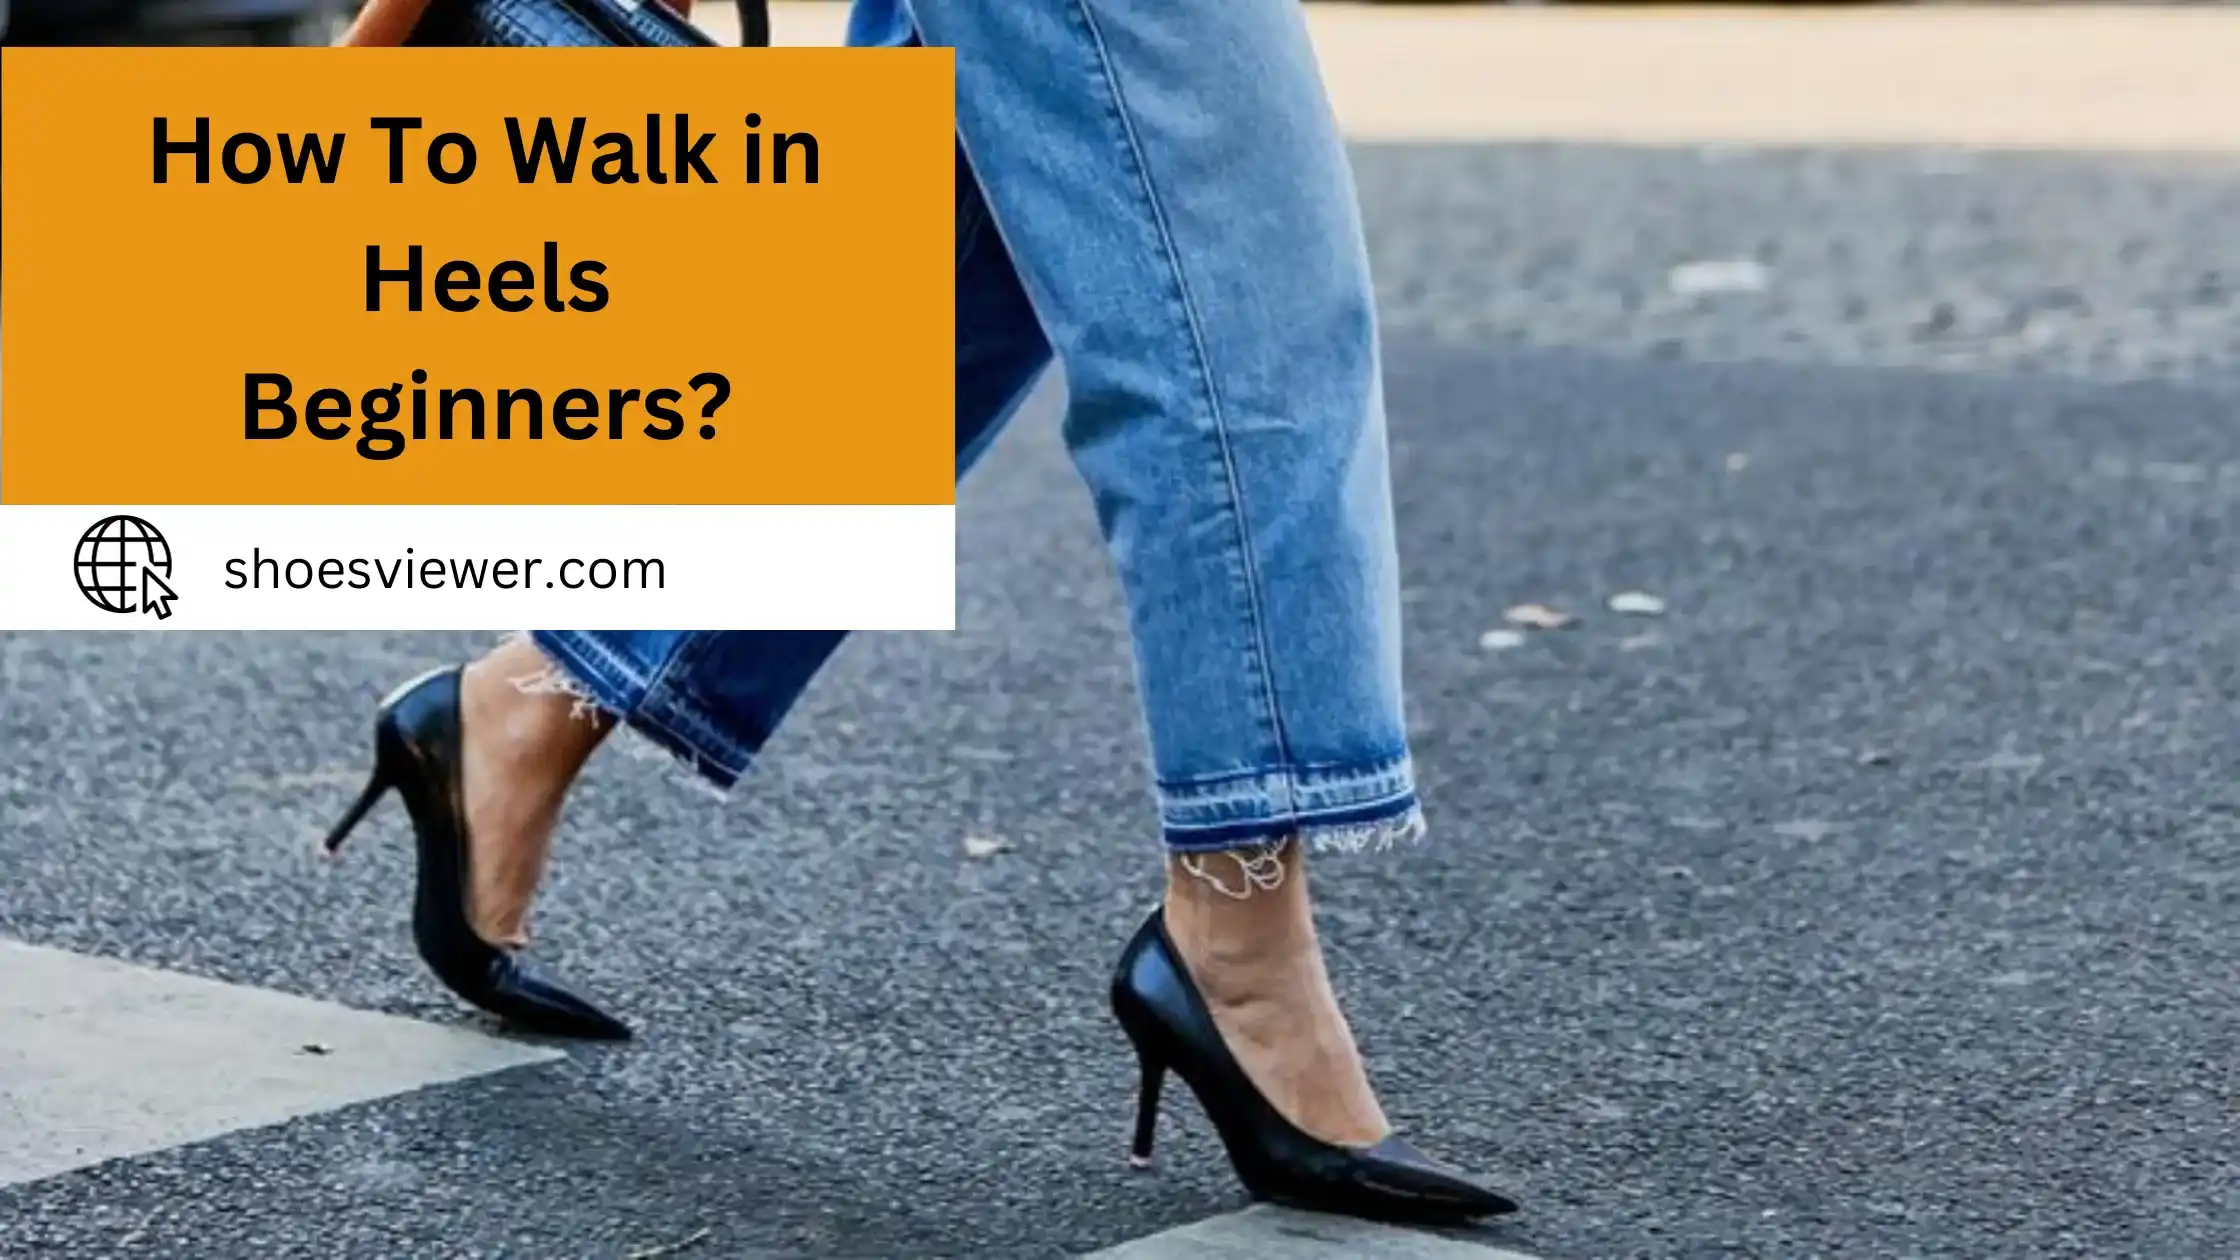 How To Walk in Heels Beginners? Detailed Information